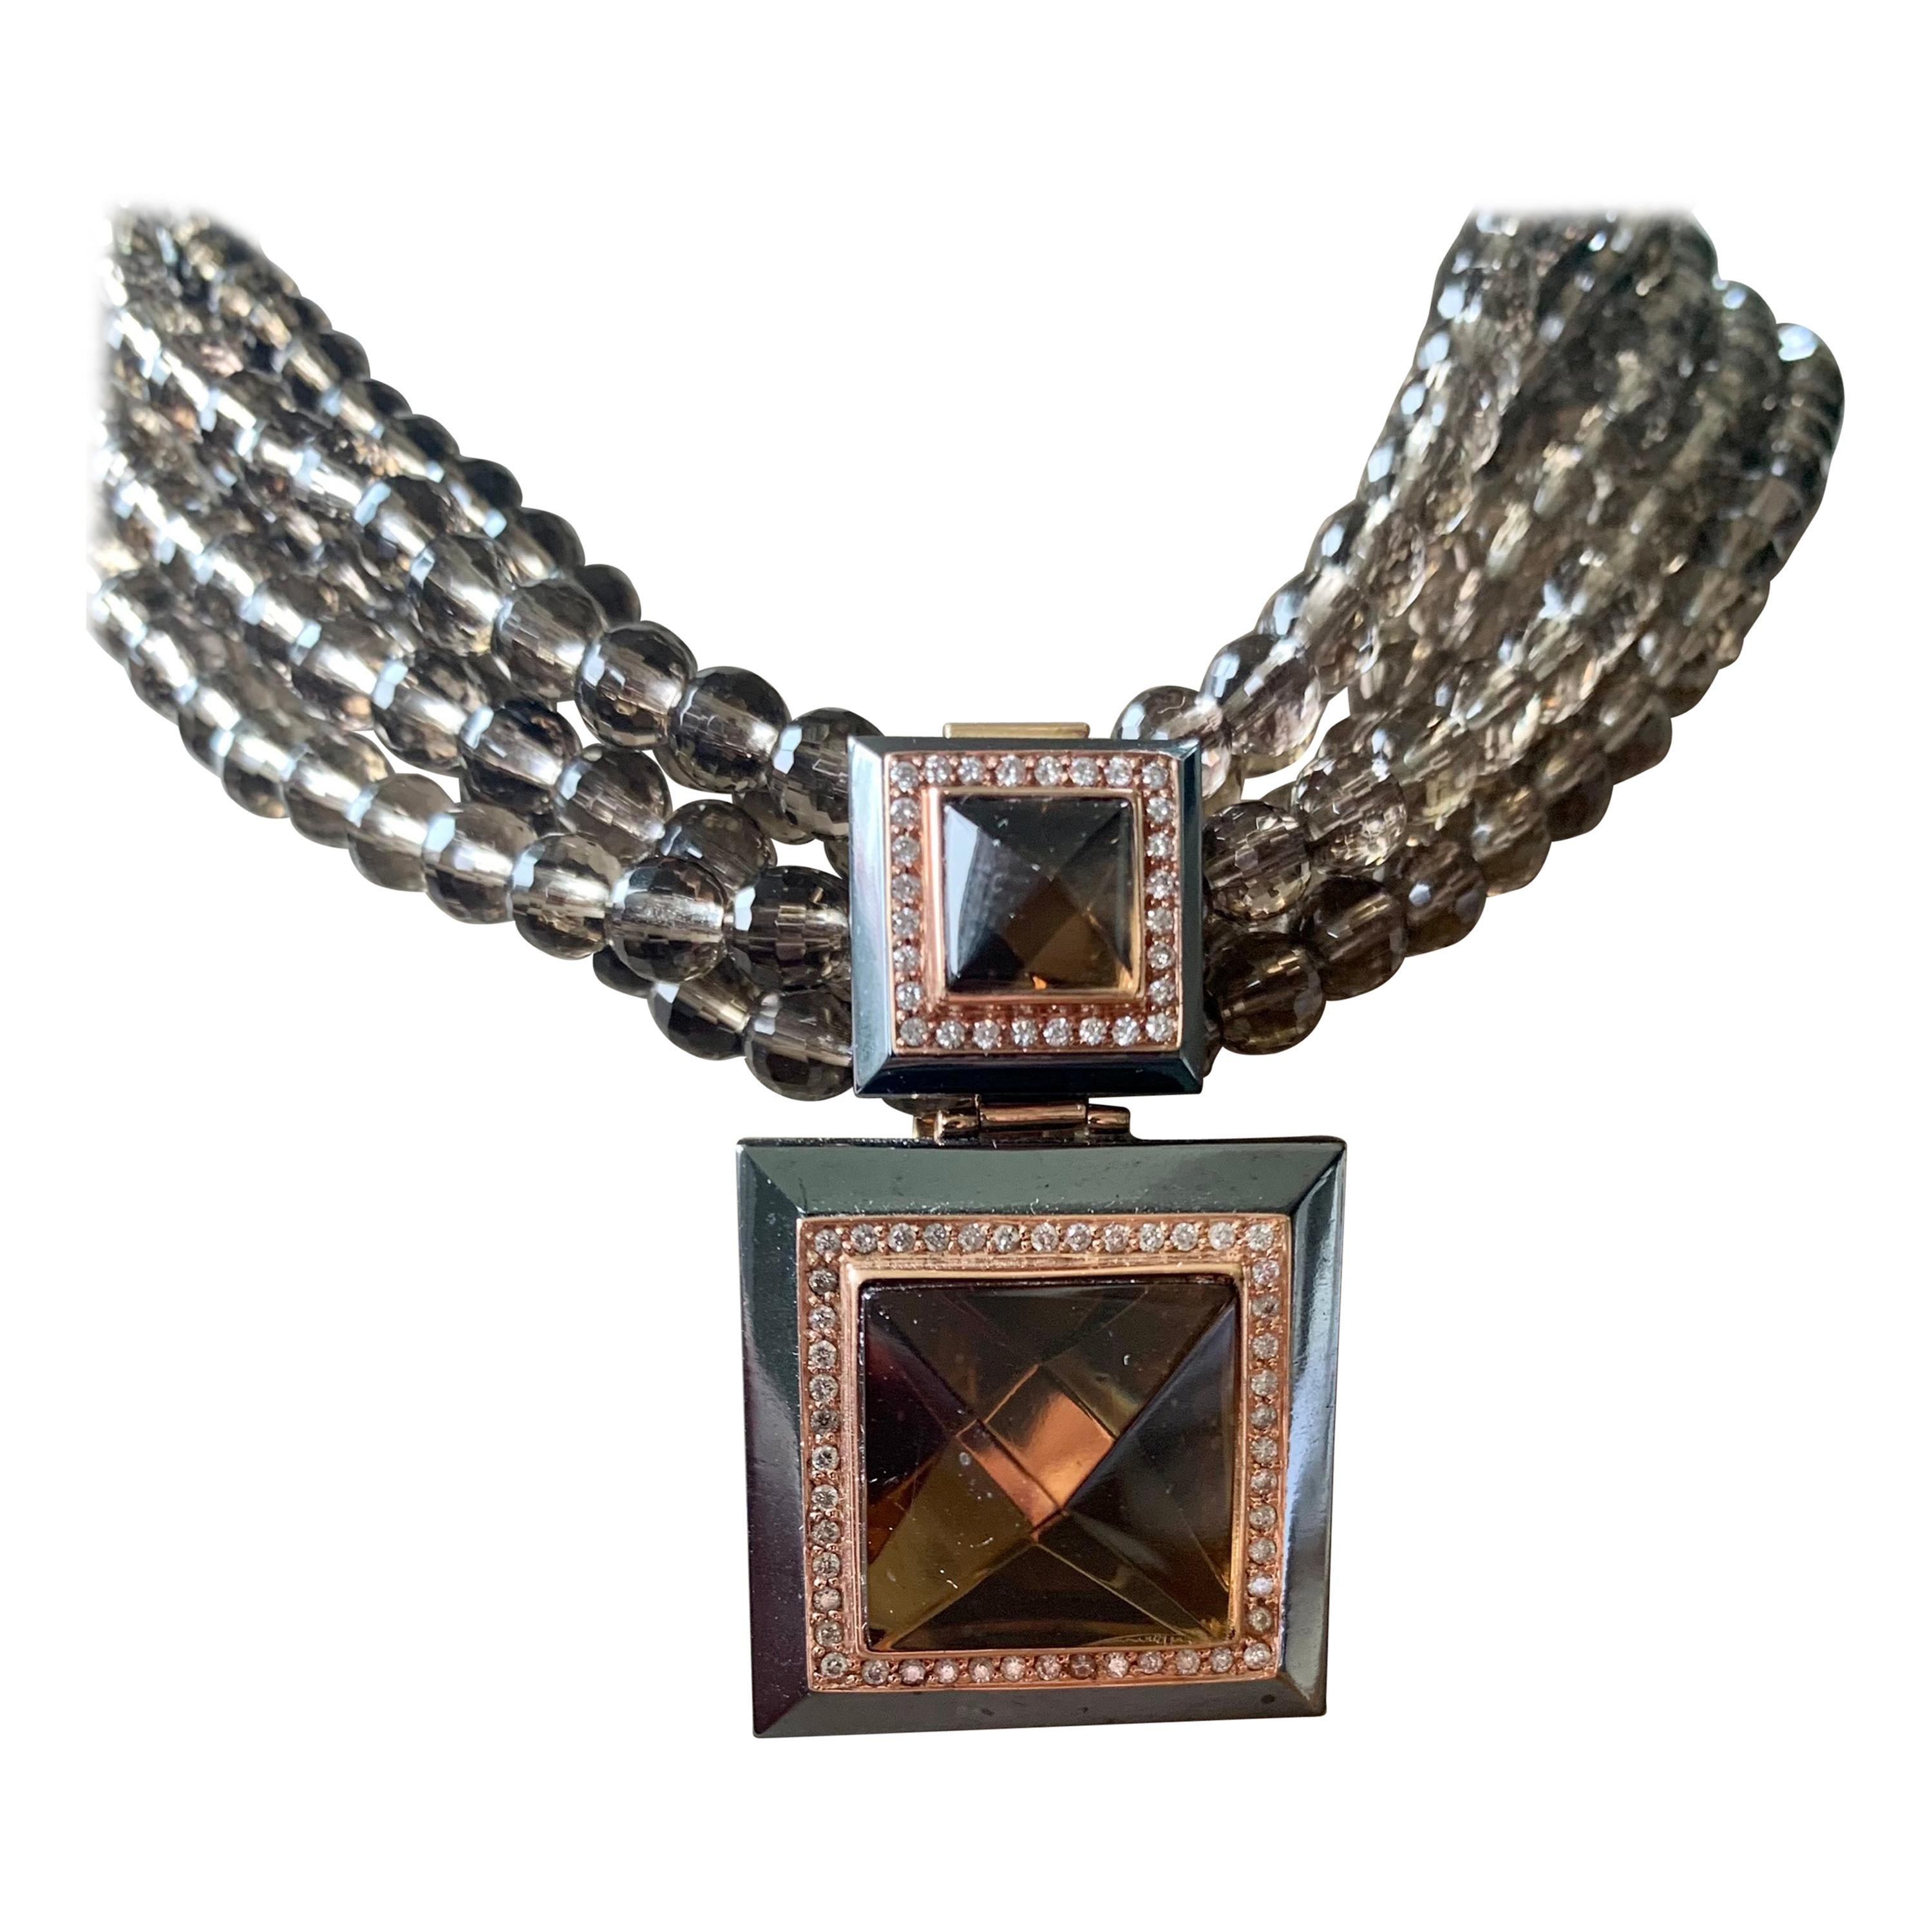 Extravagant 18 K Gold Necklace with Pendant Smoky Quartz Hematite and Diamonds